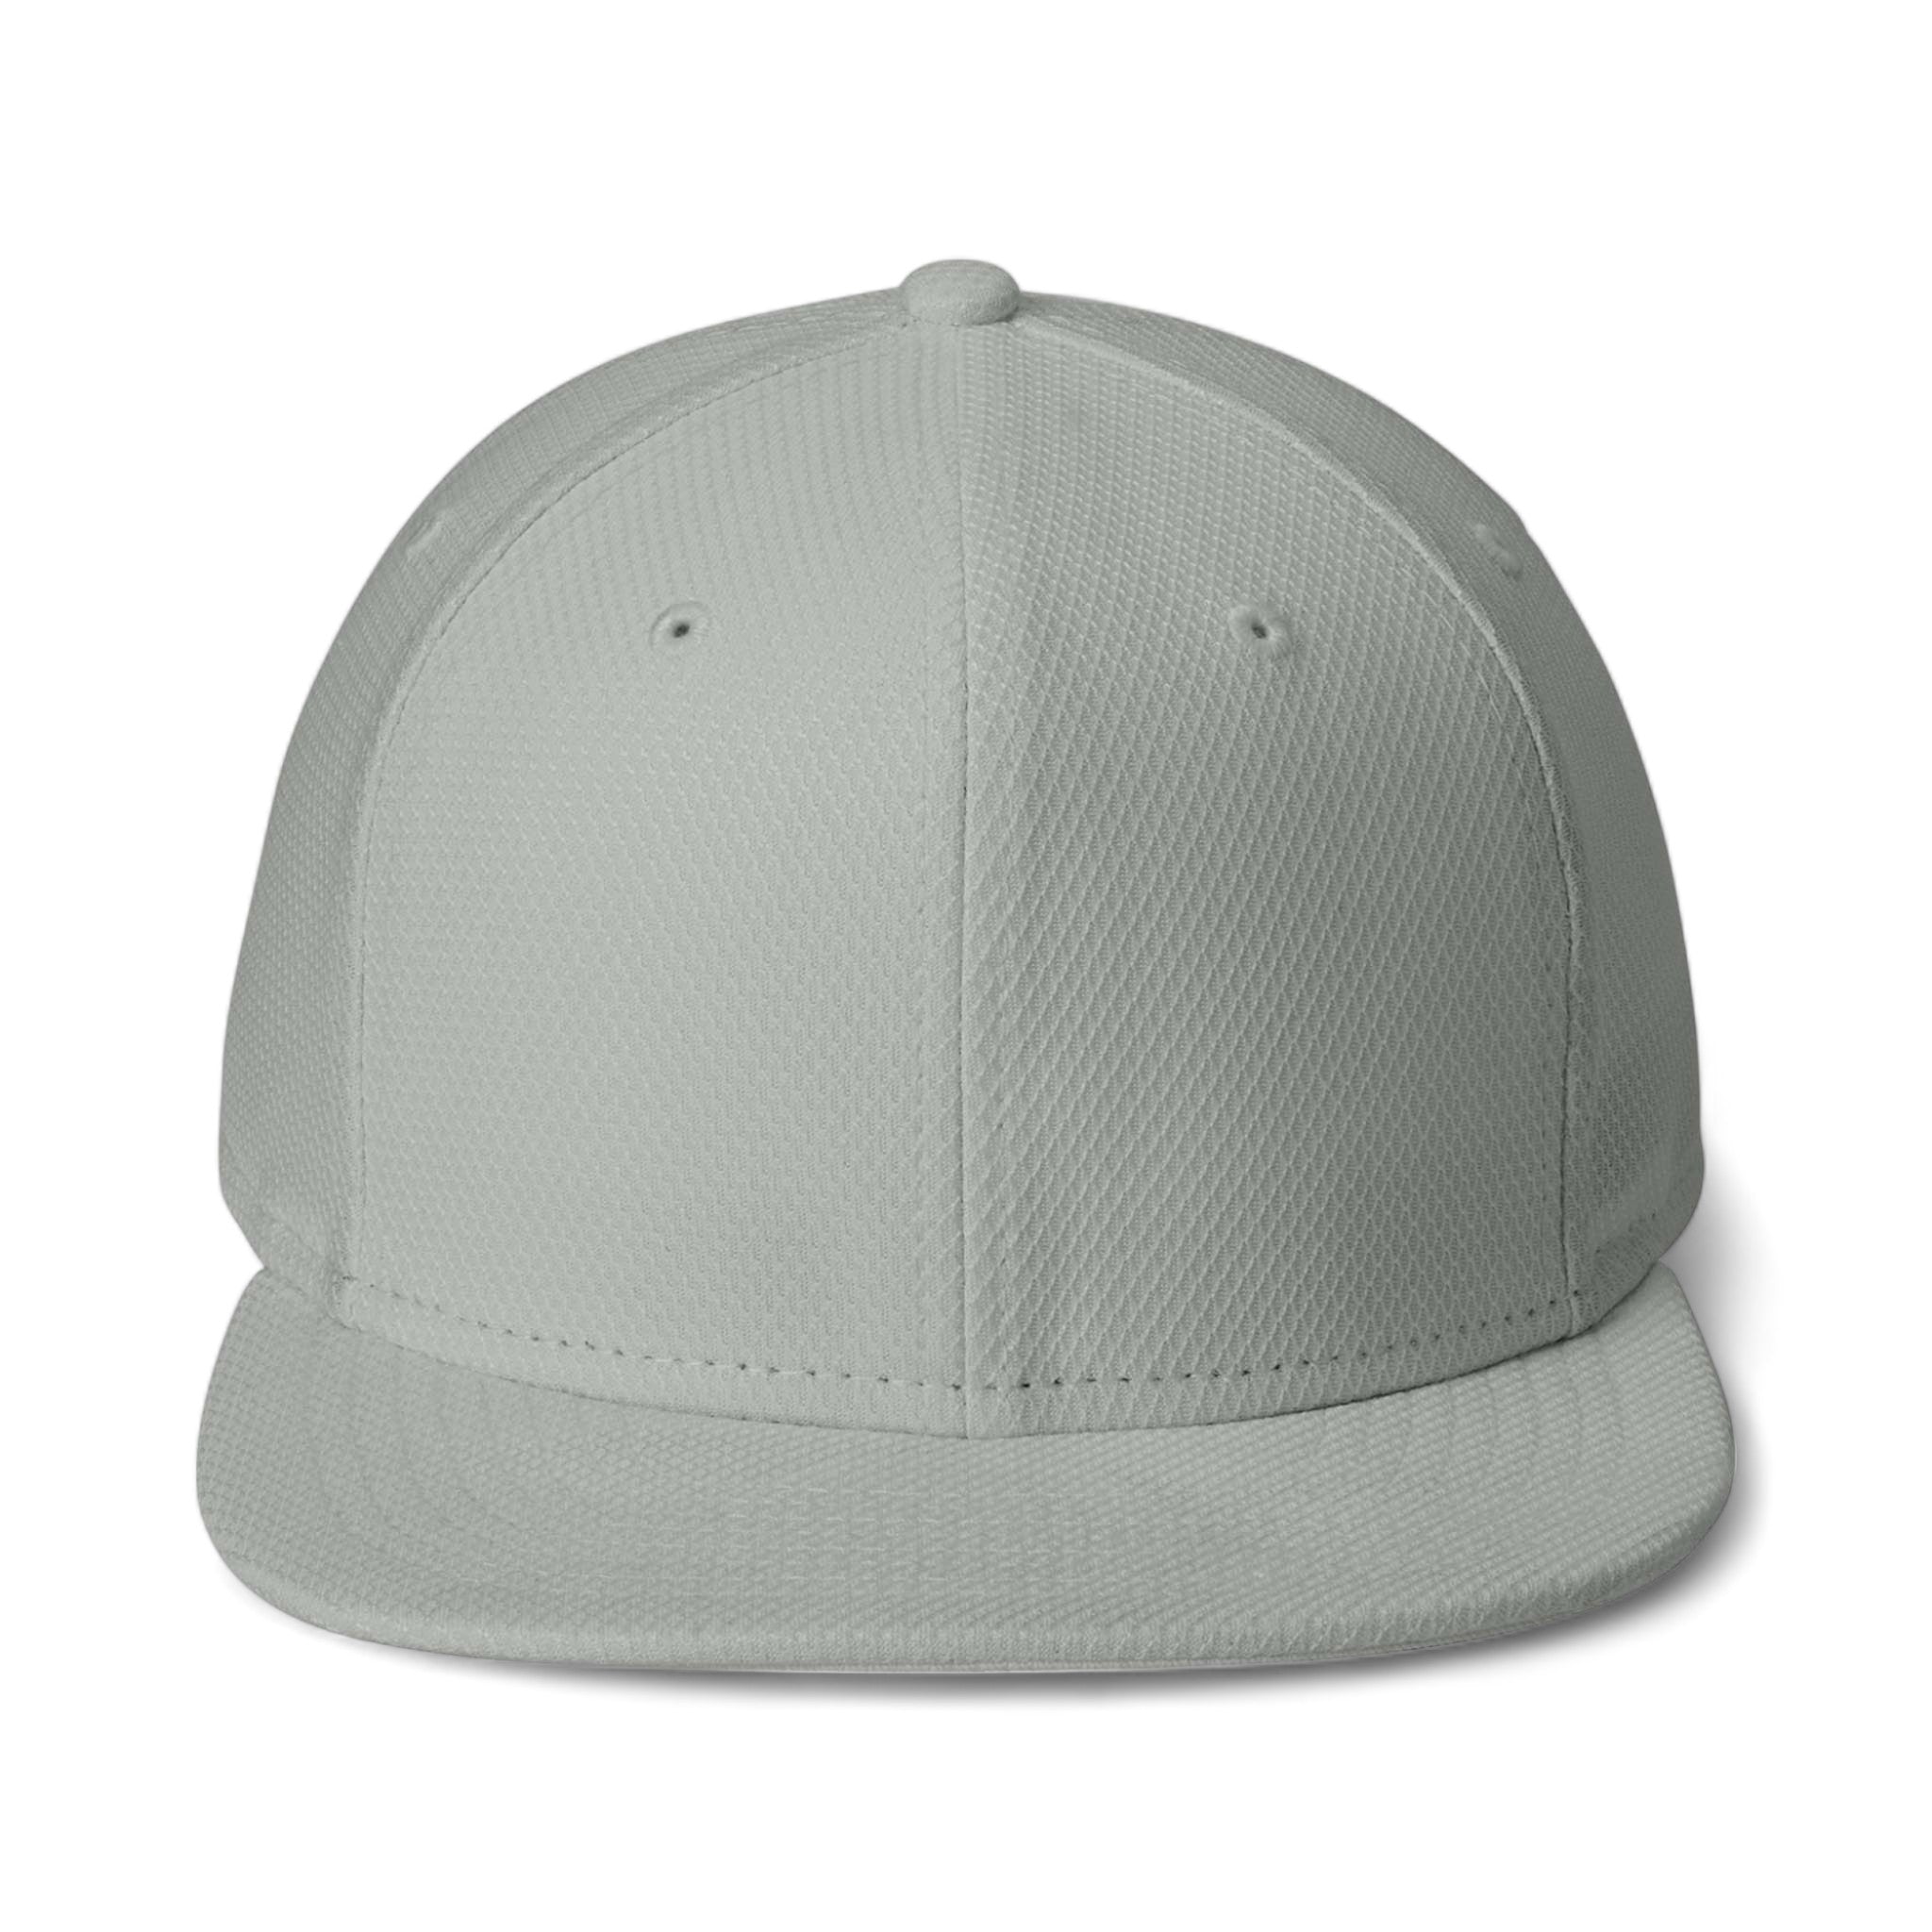 Front view of New Era NE404 custom hat in grey